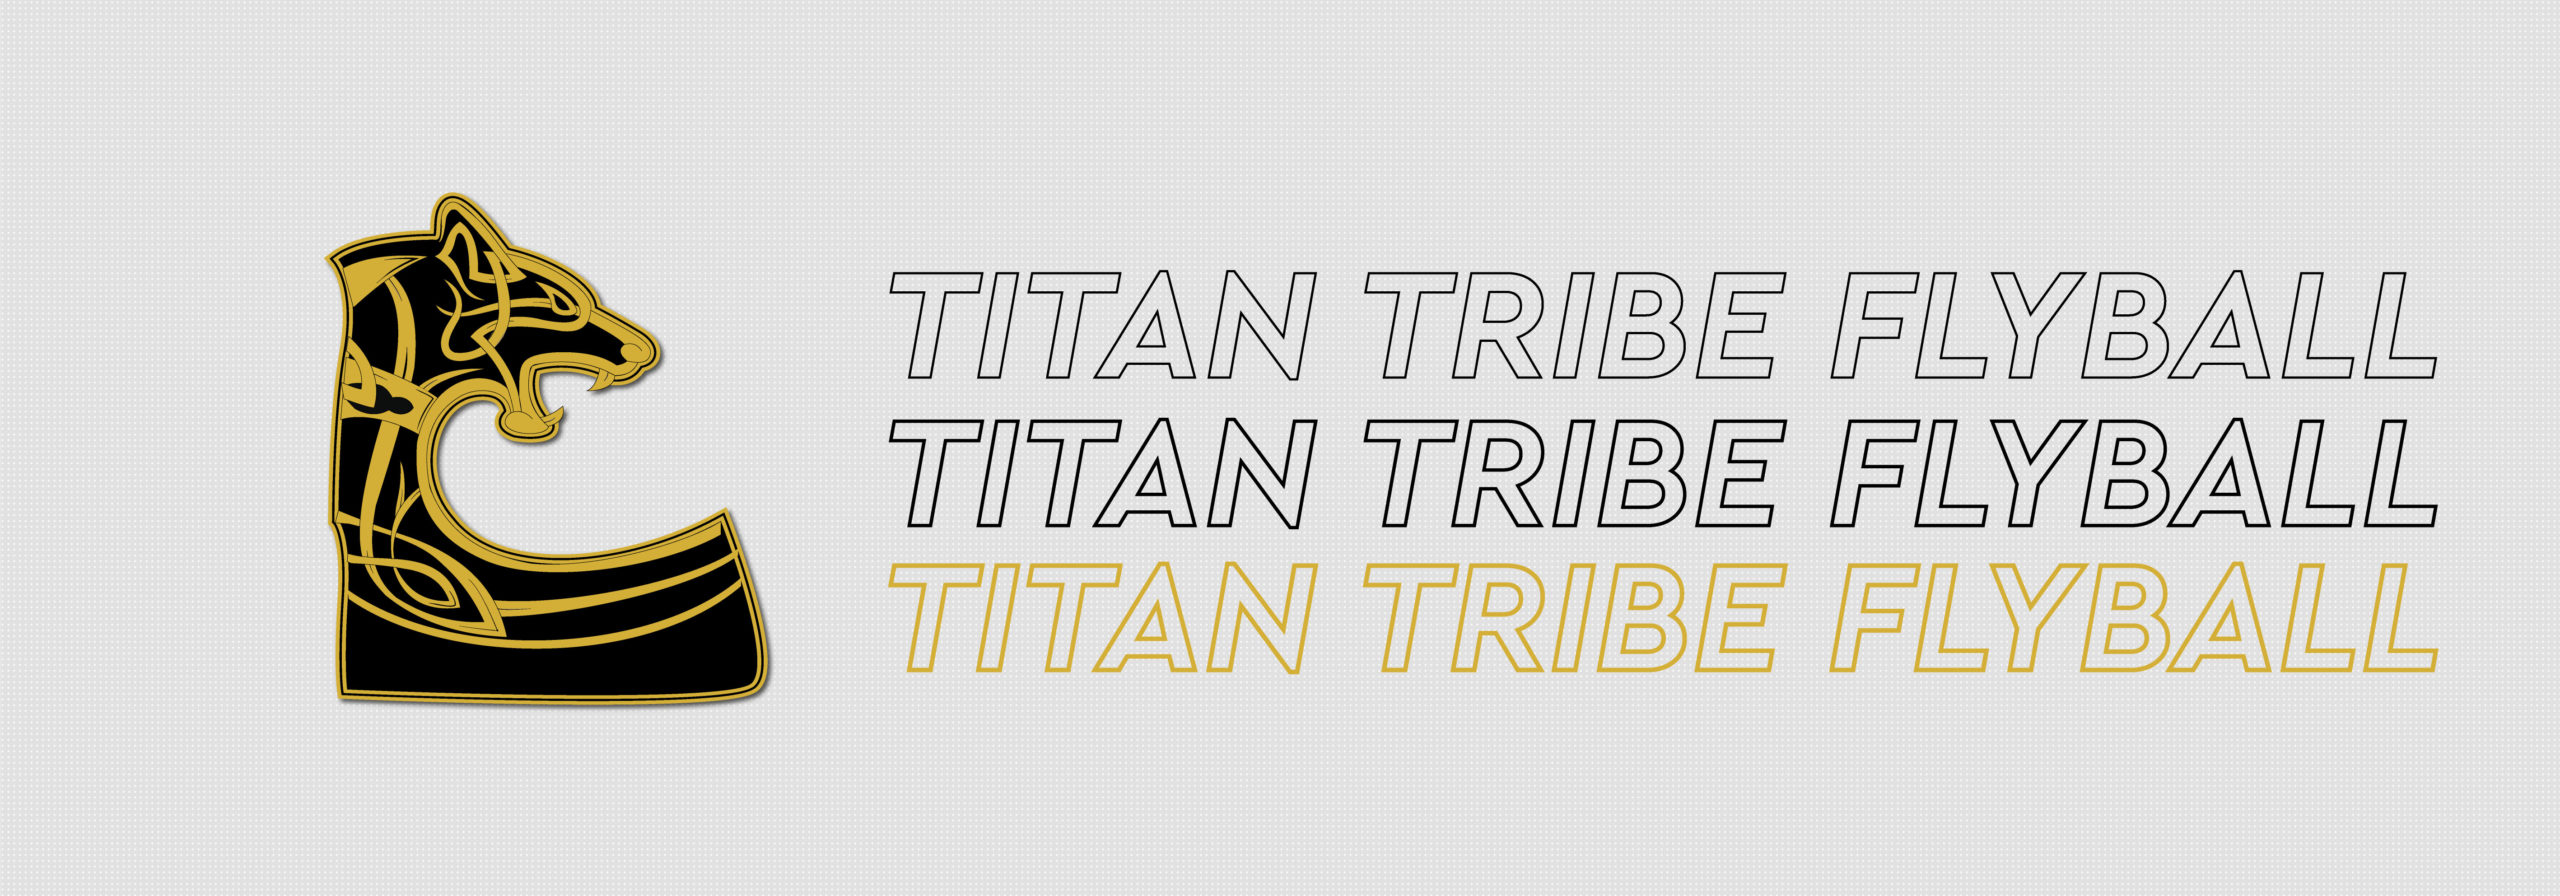 Titan Tribe Flyball Team